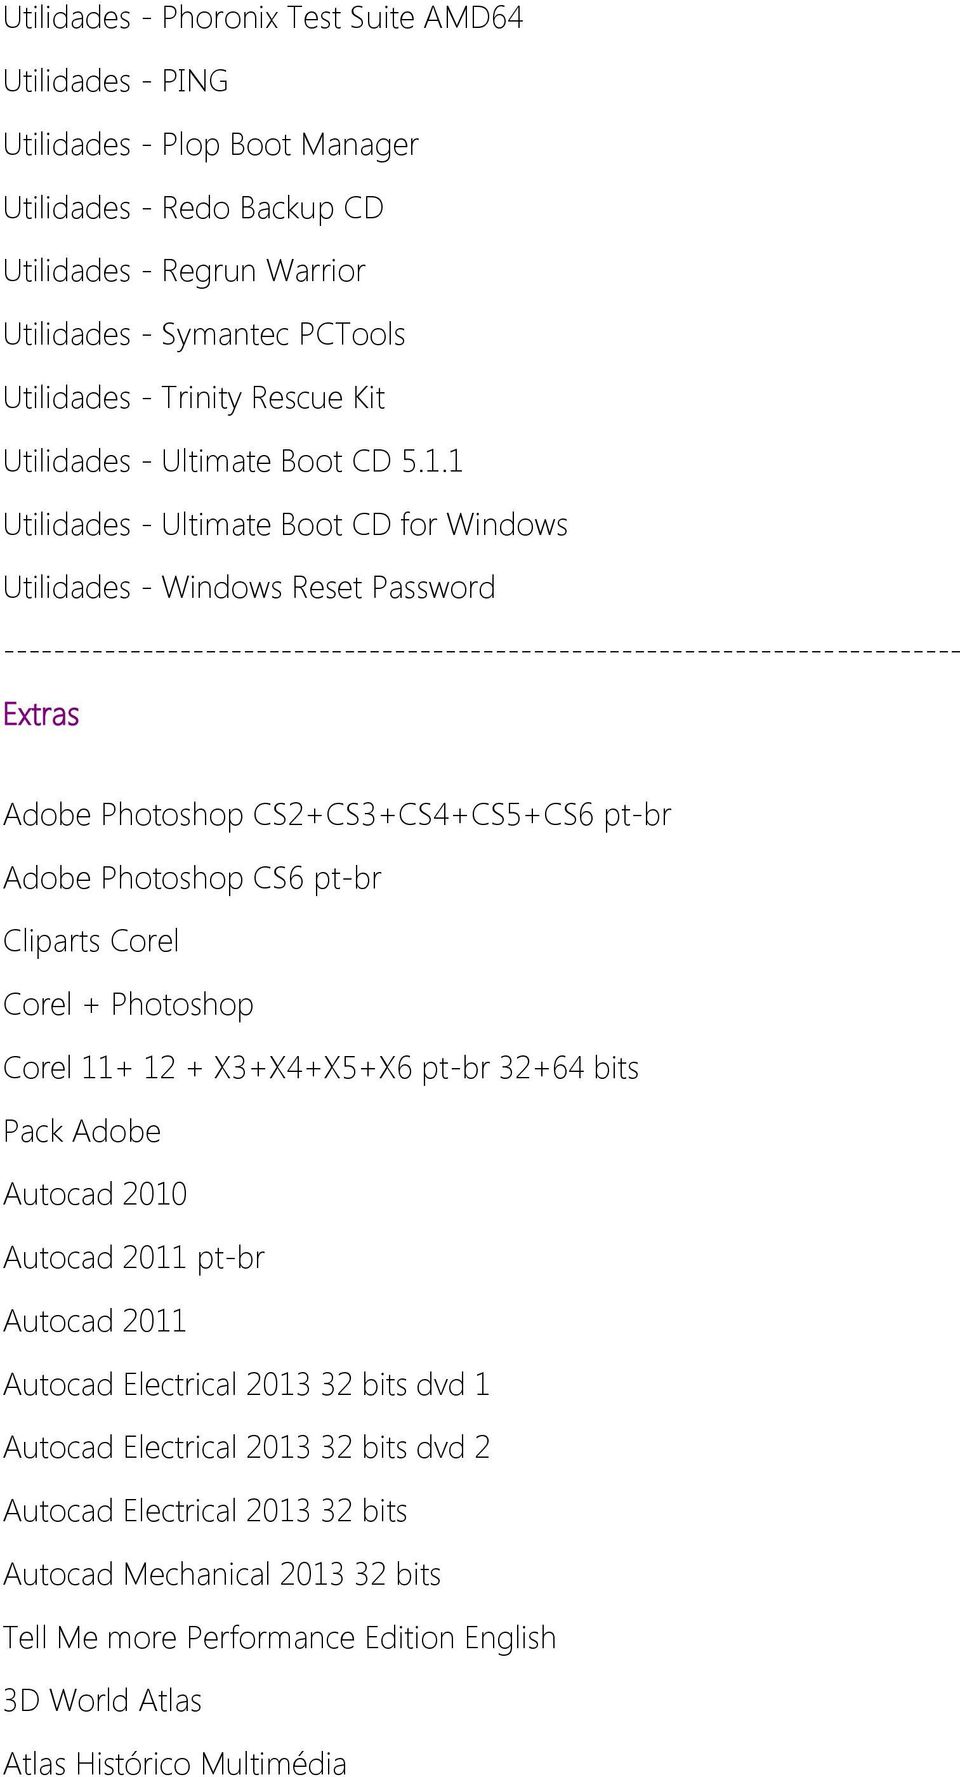 1 Utilidades - Ultimate Boot CD for Windows Utilidades - Windows Reset Password ---------------------------------------------------------------------------- Extras Adobe Photoshop CS2+CS3+CS4+CS5+CS6